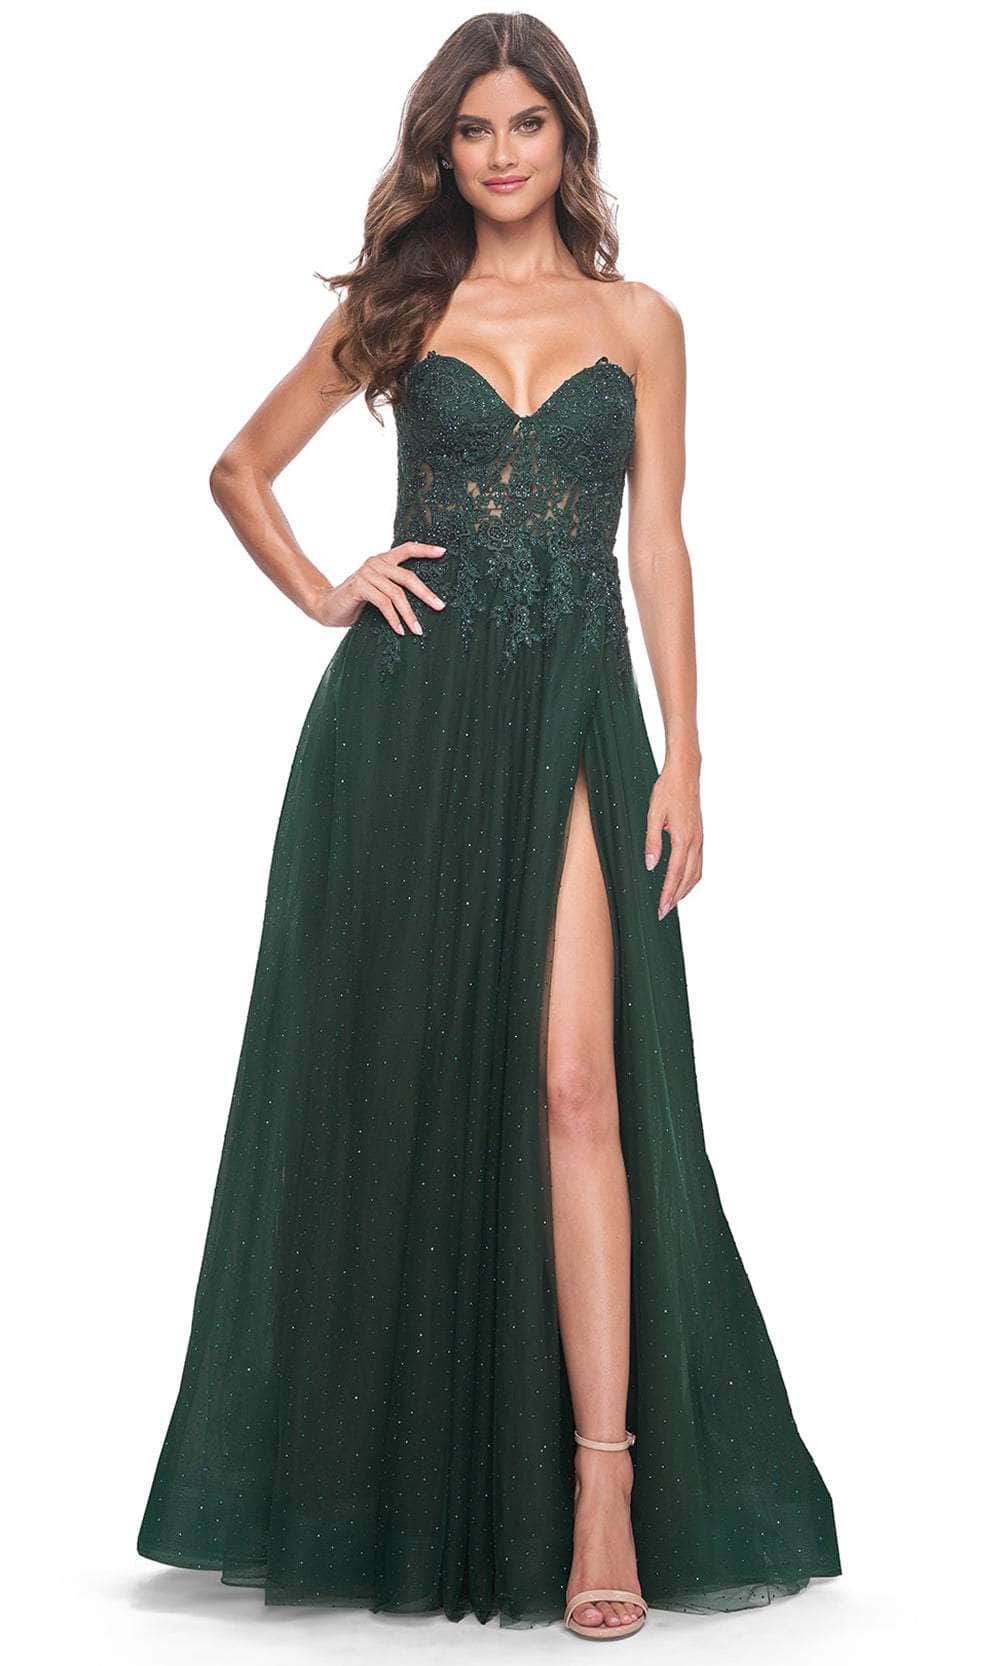 La Femme 32253 - Sweetheart Embellished Prom Gown Prom Dresses 00 / Dark Emerald